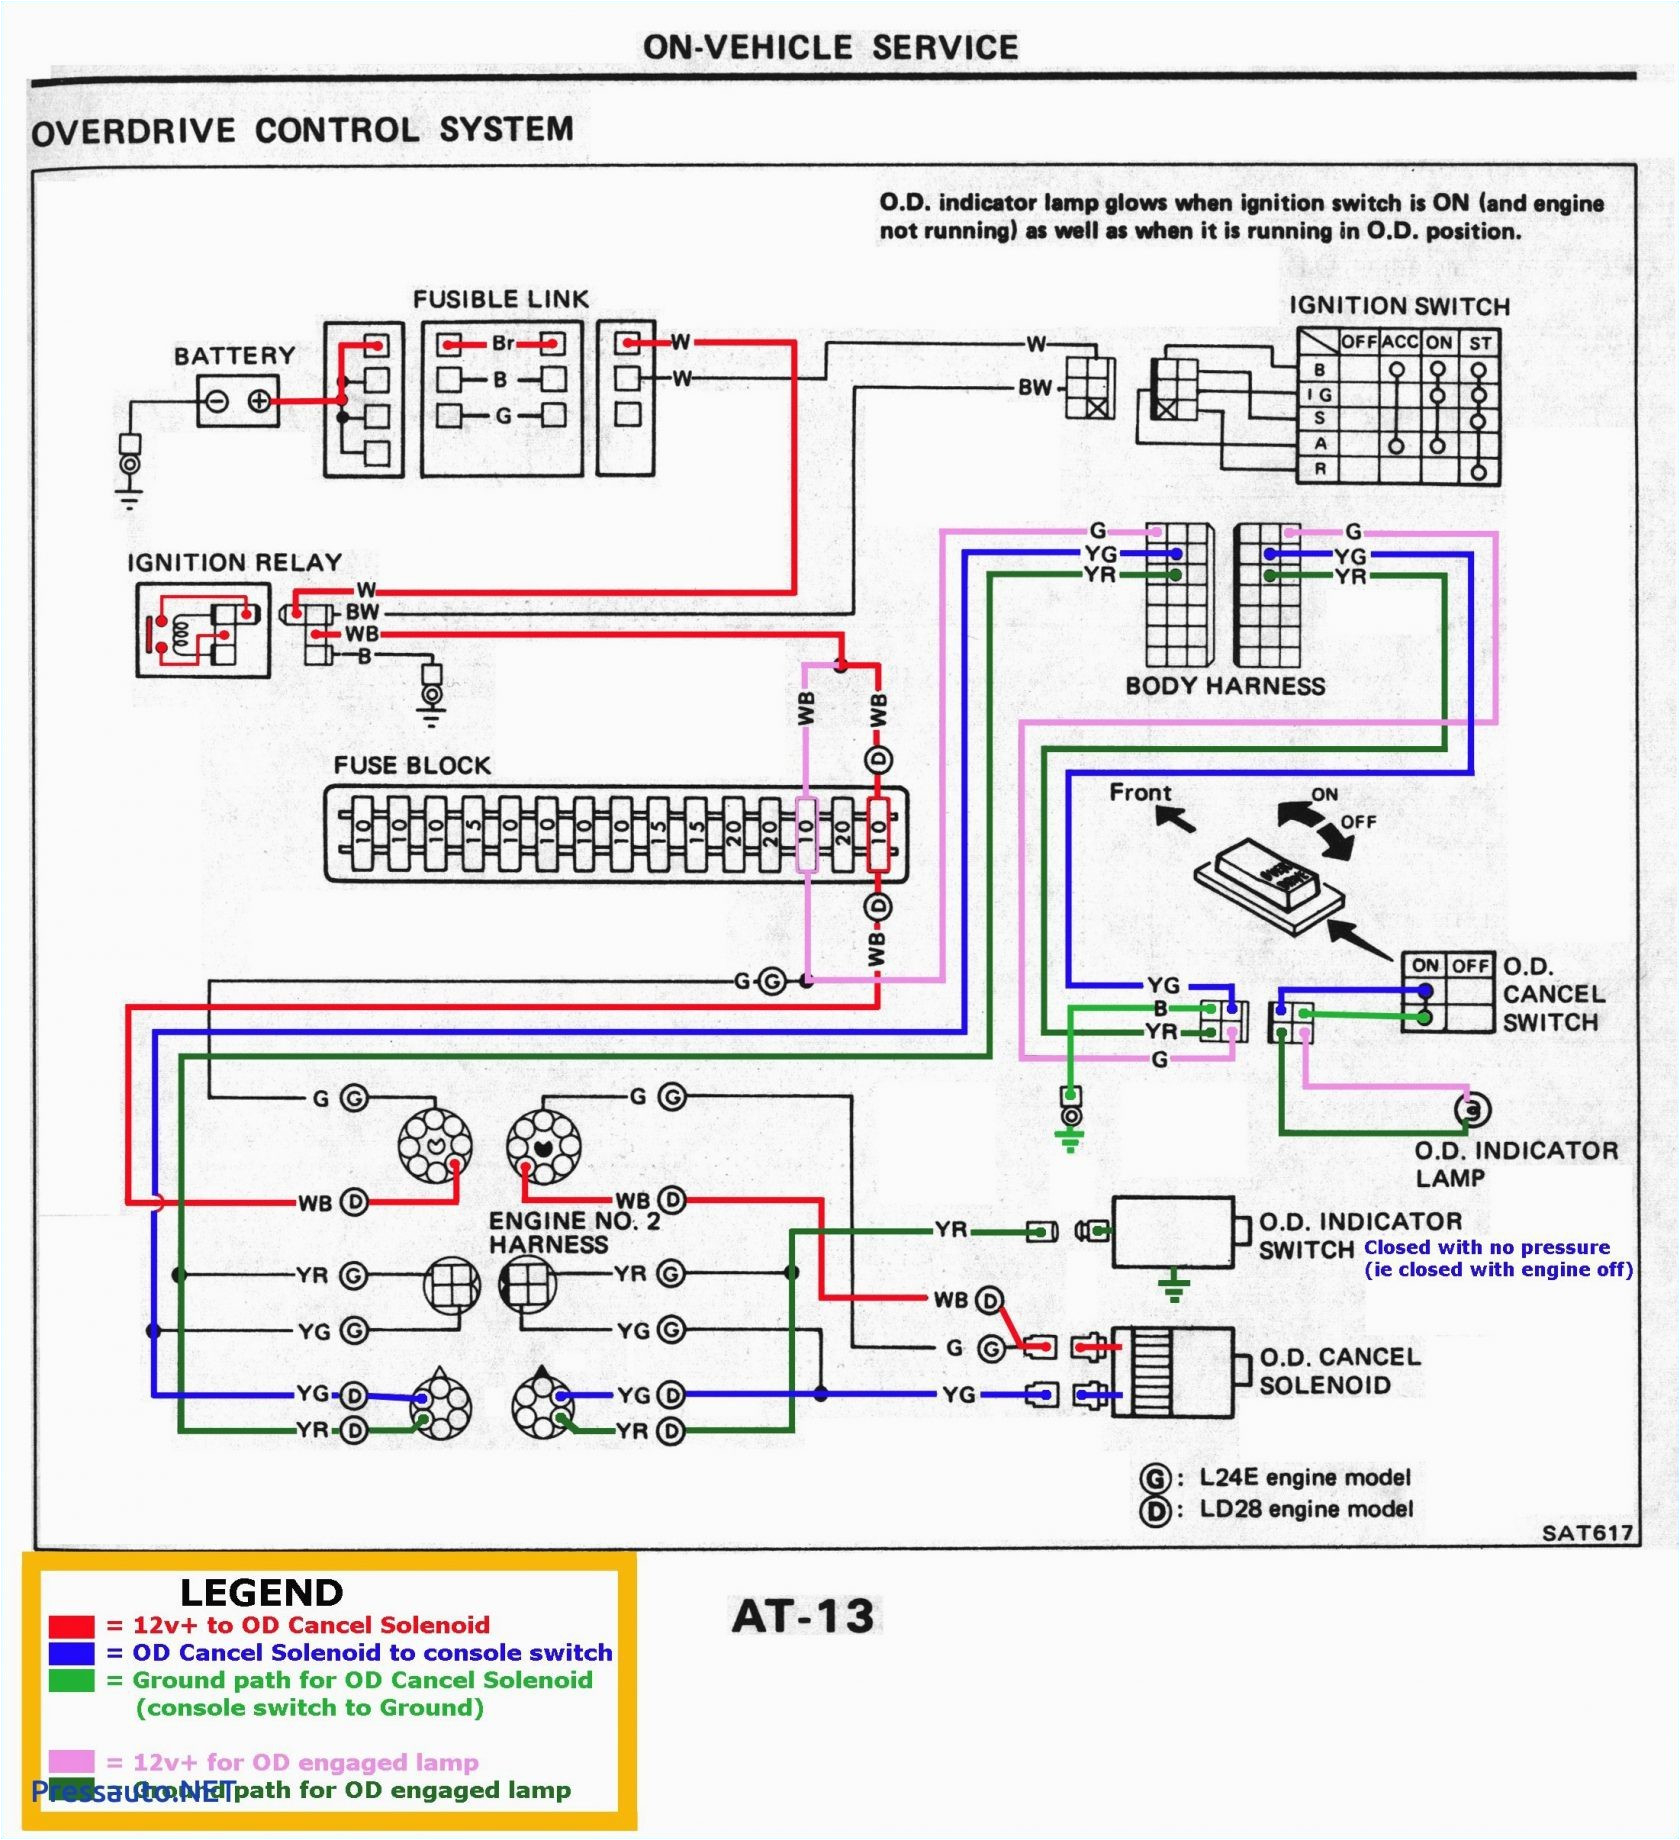 wiring diagram chevy spark plug chevrolet blazer wiring diagram host wiring diagram chevy spark plug chevrolet blazer